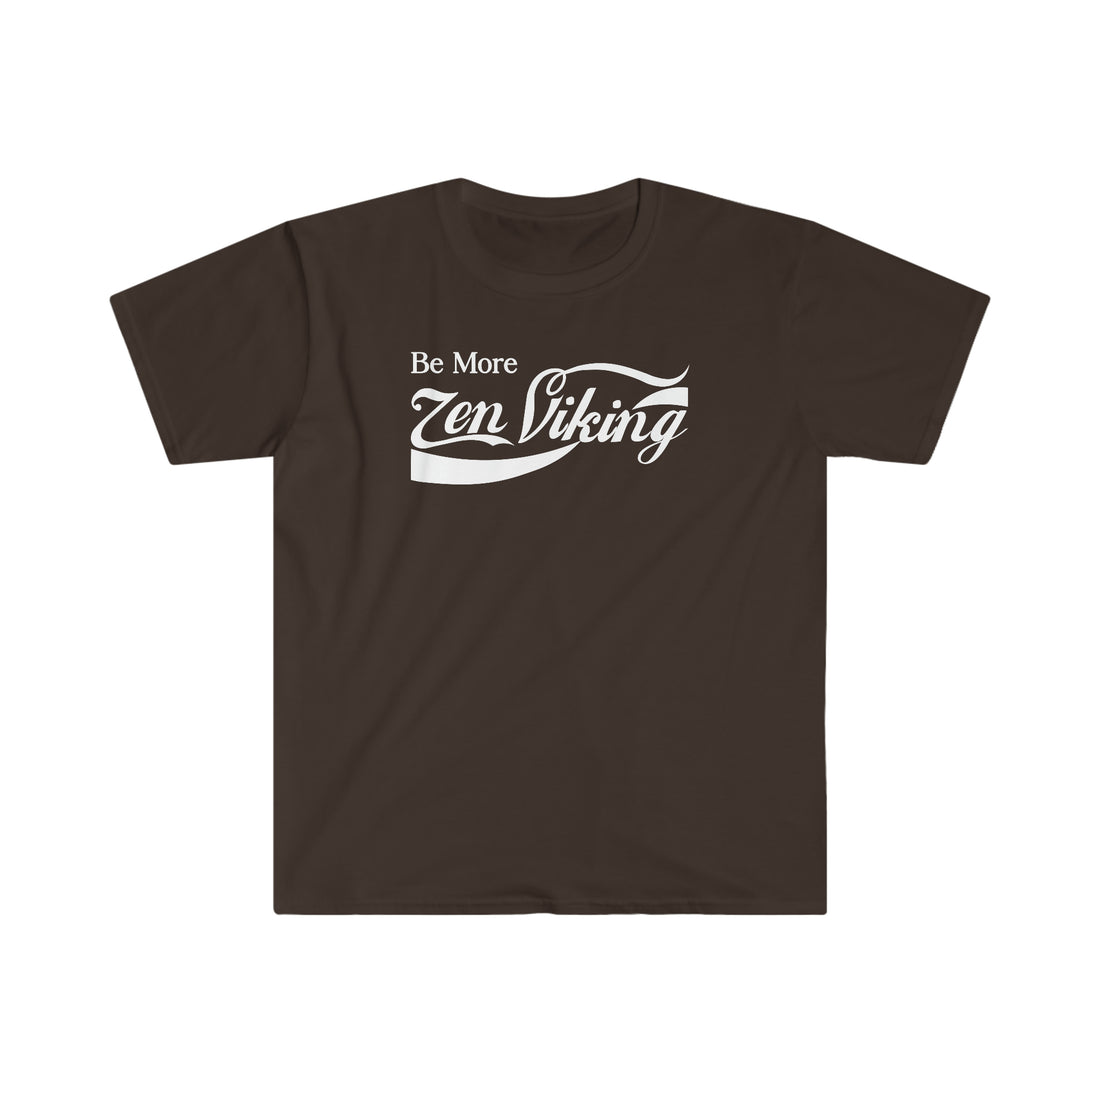 Be More ZV White Label T-Shirt - THE ZEN VIKING